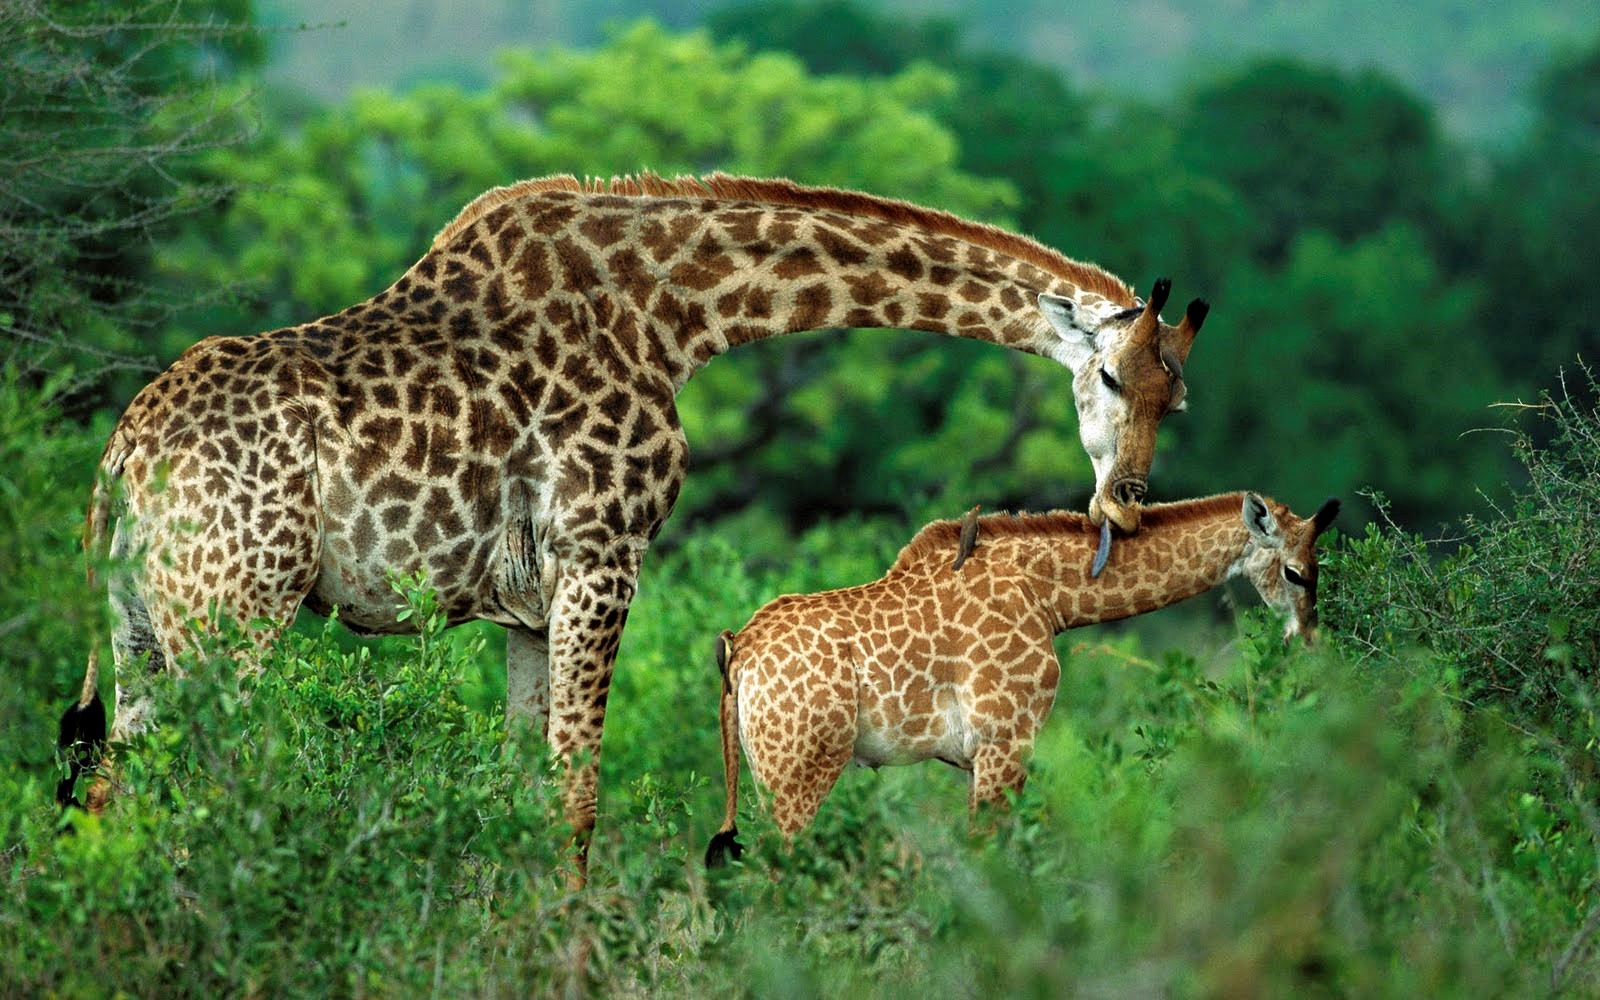 animals wallpaper hd free download,terrestrial animal,wildlife,mammal,giraffe,vertebrate